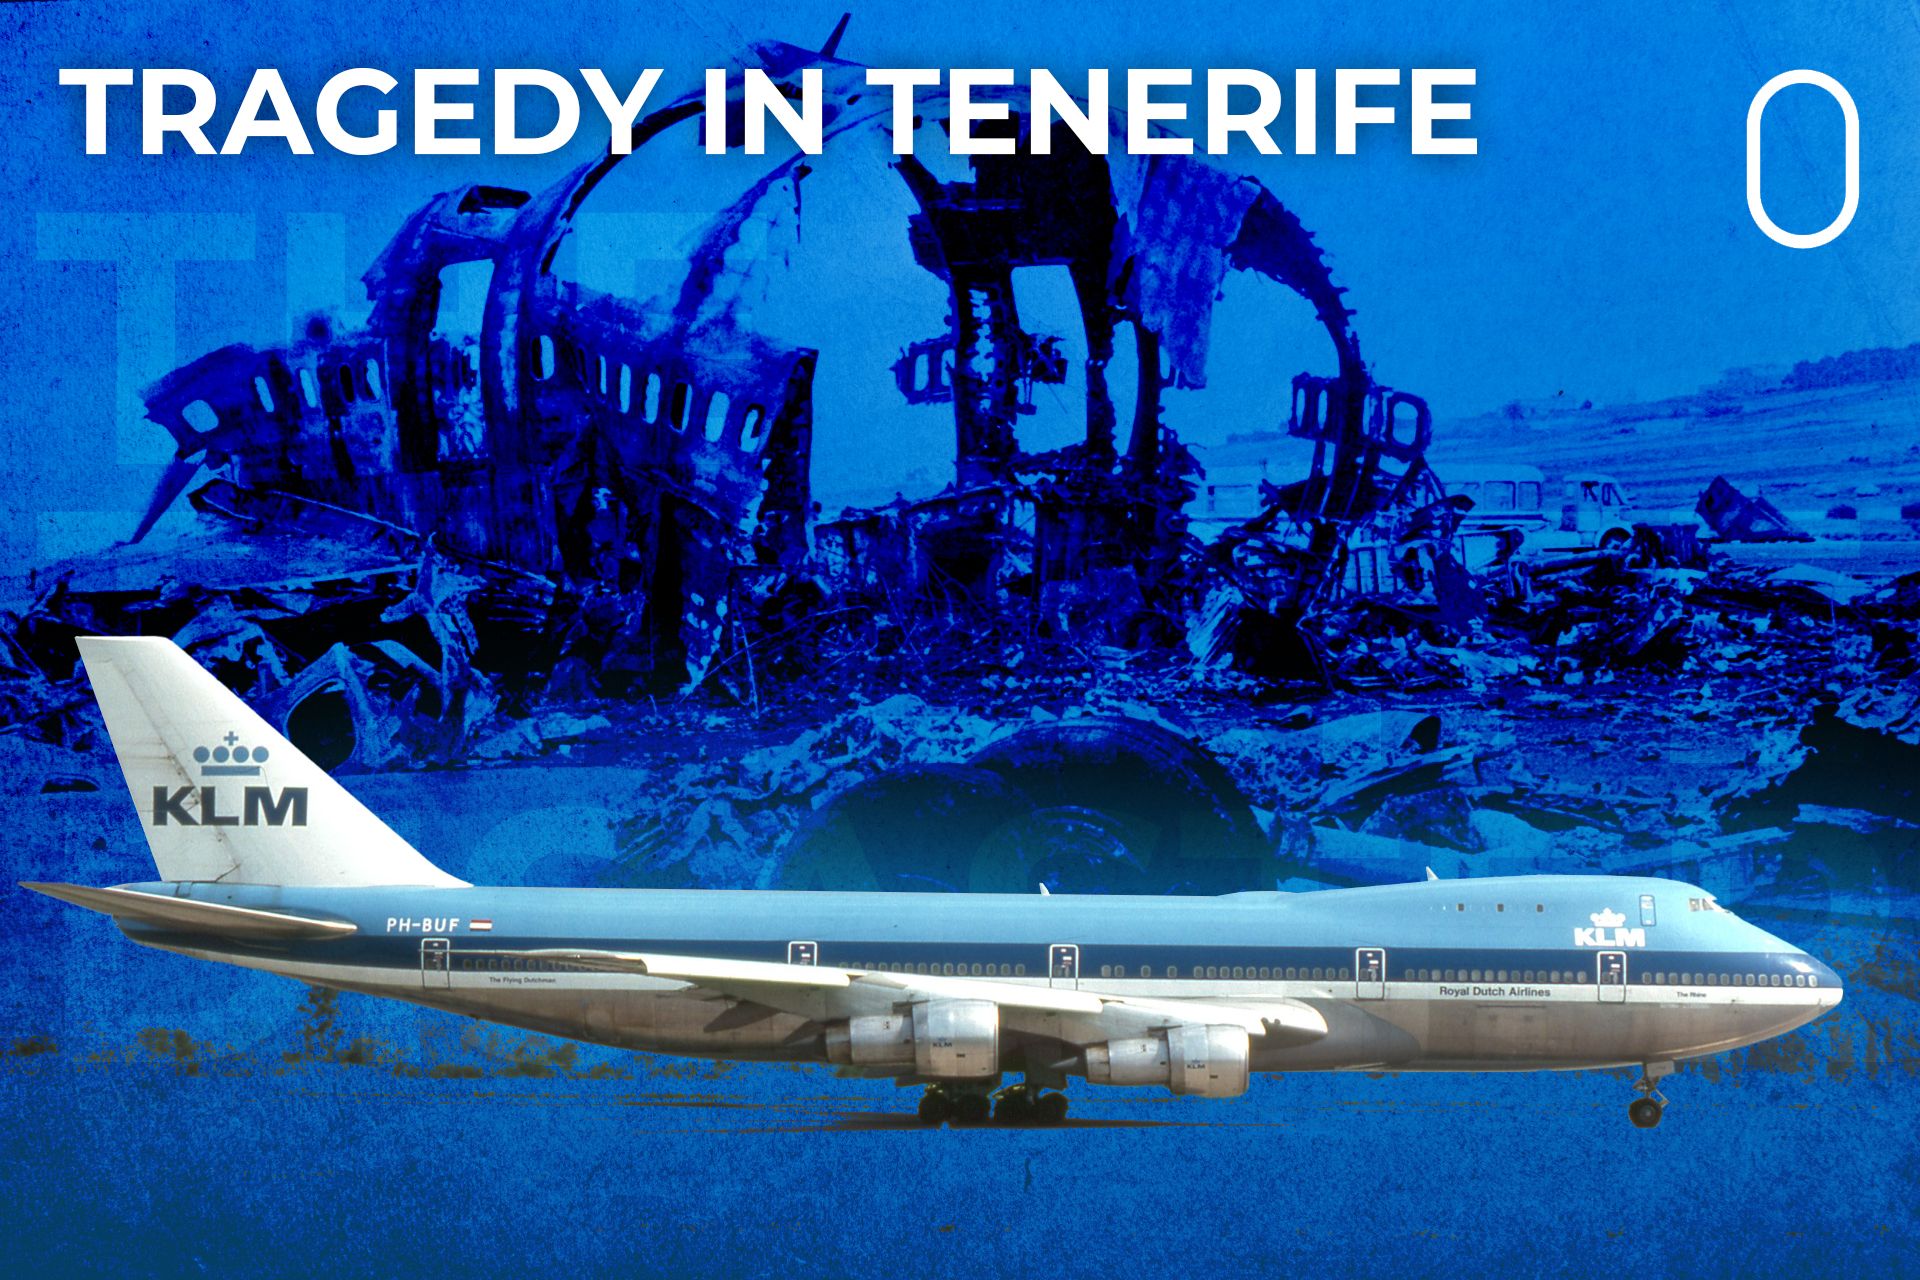 tenerife airport disaster time magazine